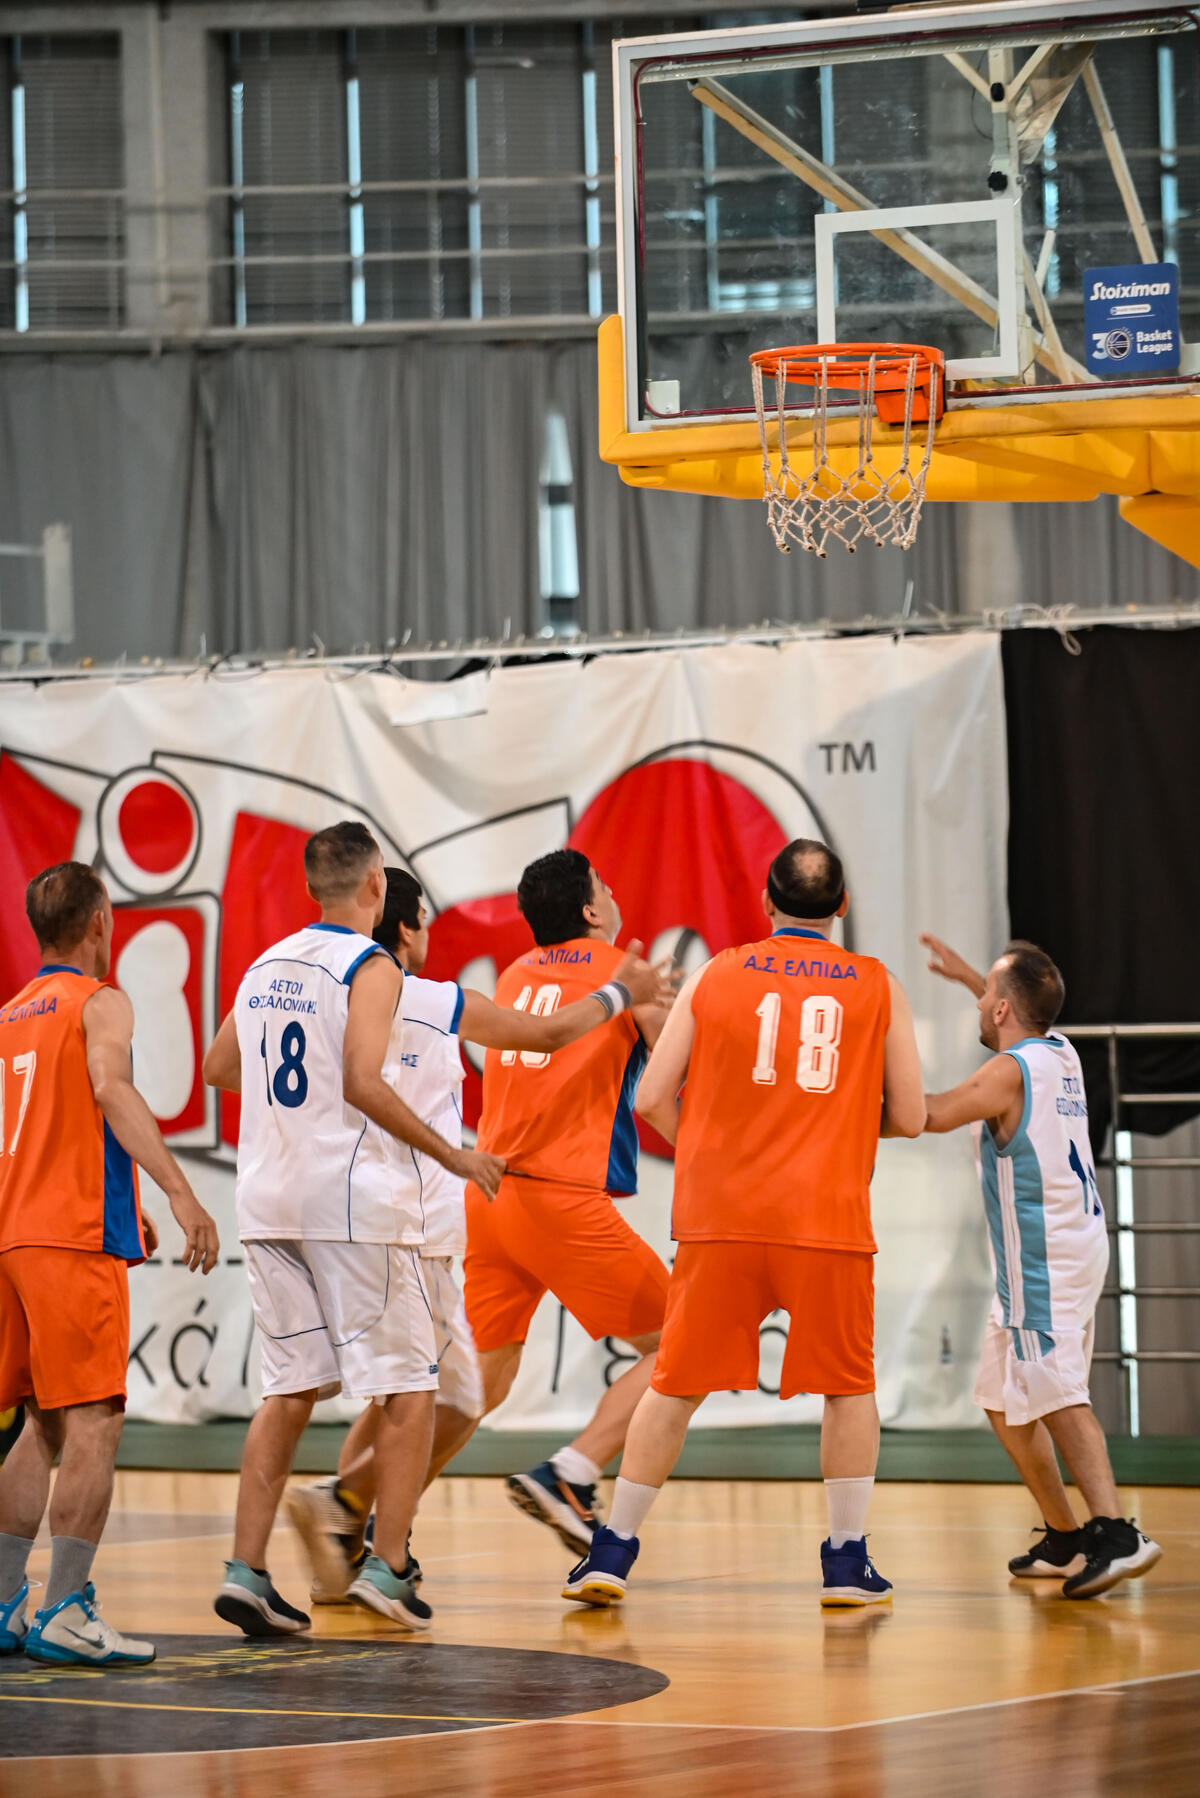 Panellinio Basket AMEA 5.6 (69)